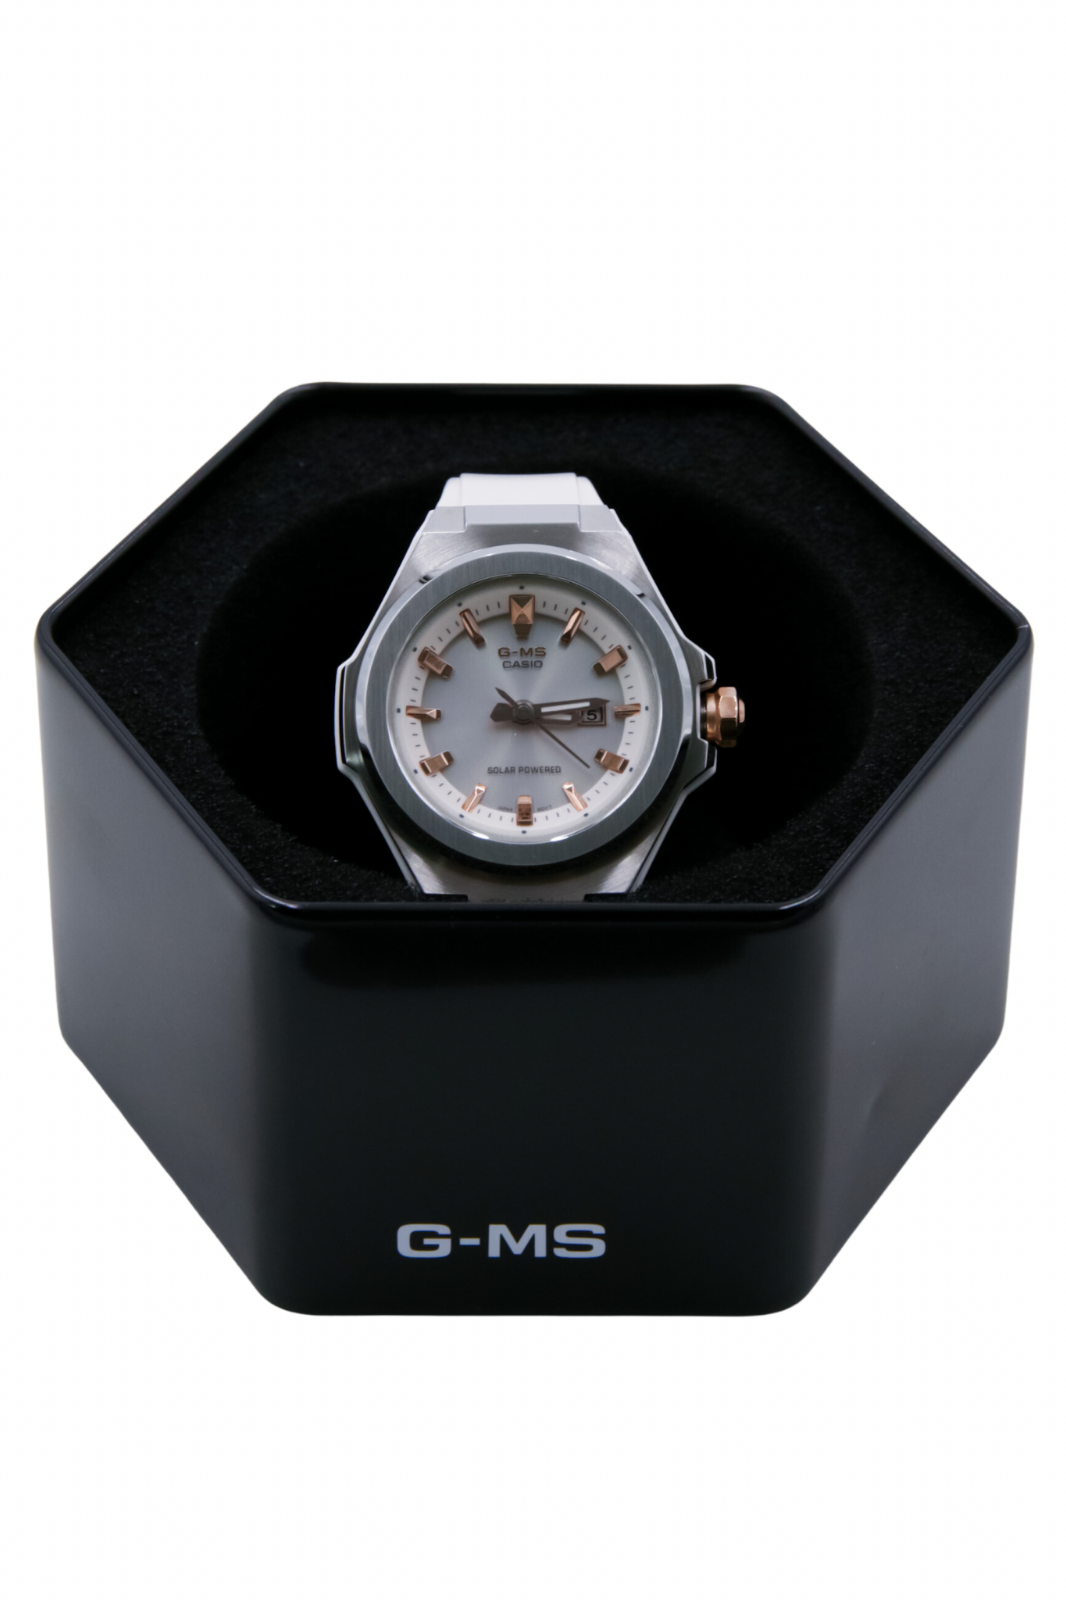 Casio G-Shock G-MS Women's Solar Powered White Strap Watch MSGS500-7A 889232259338